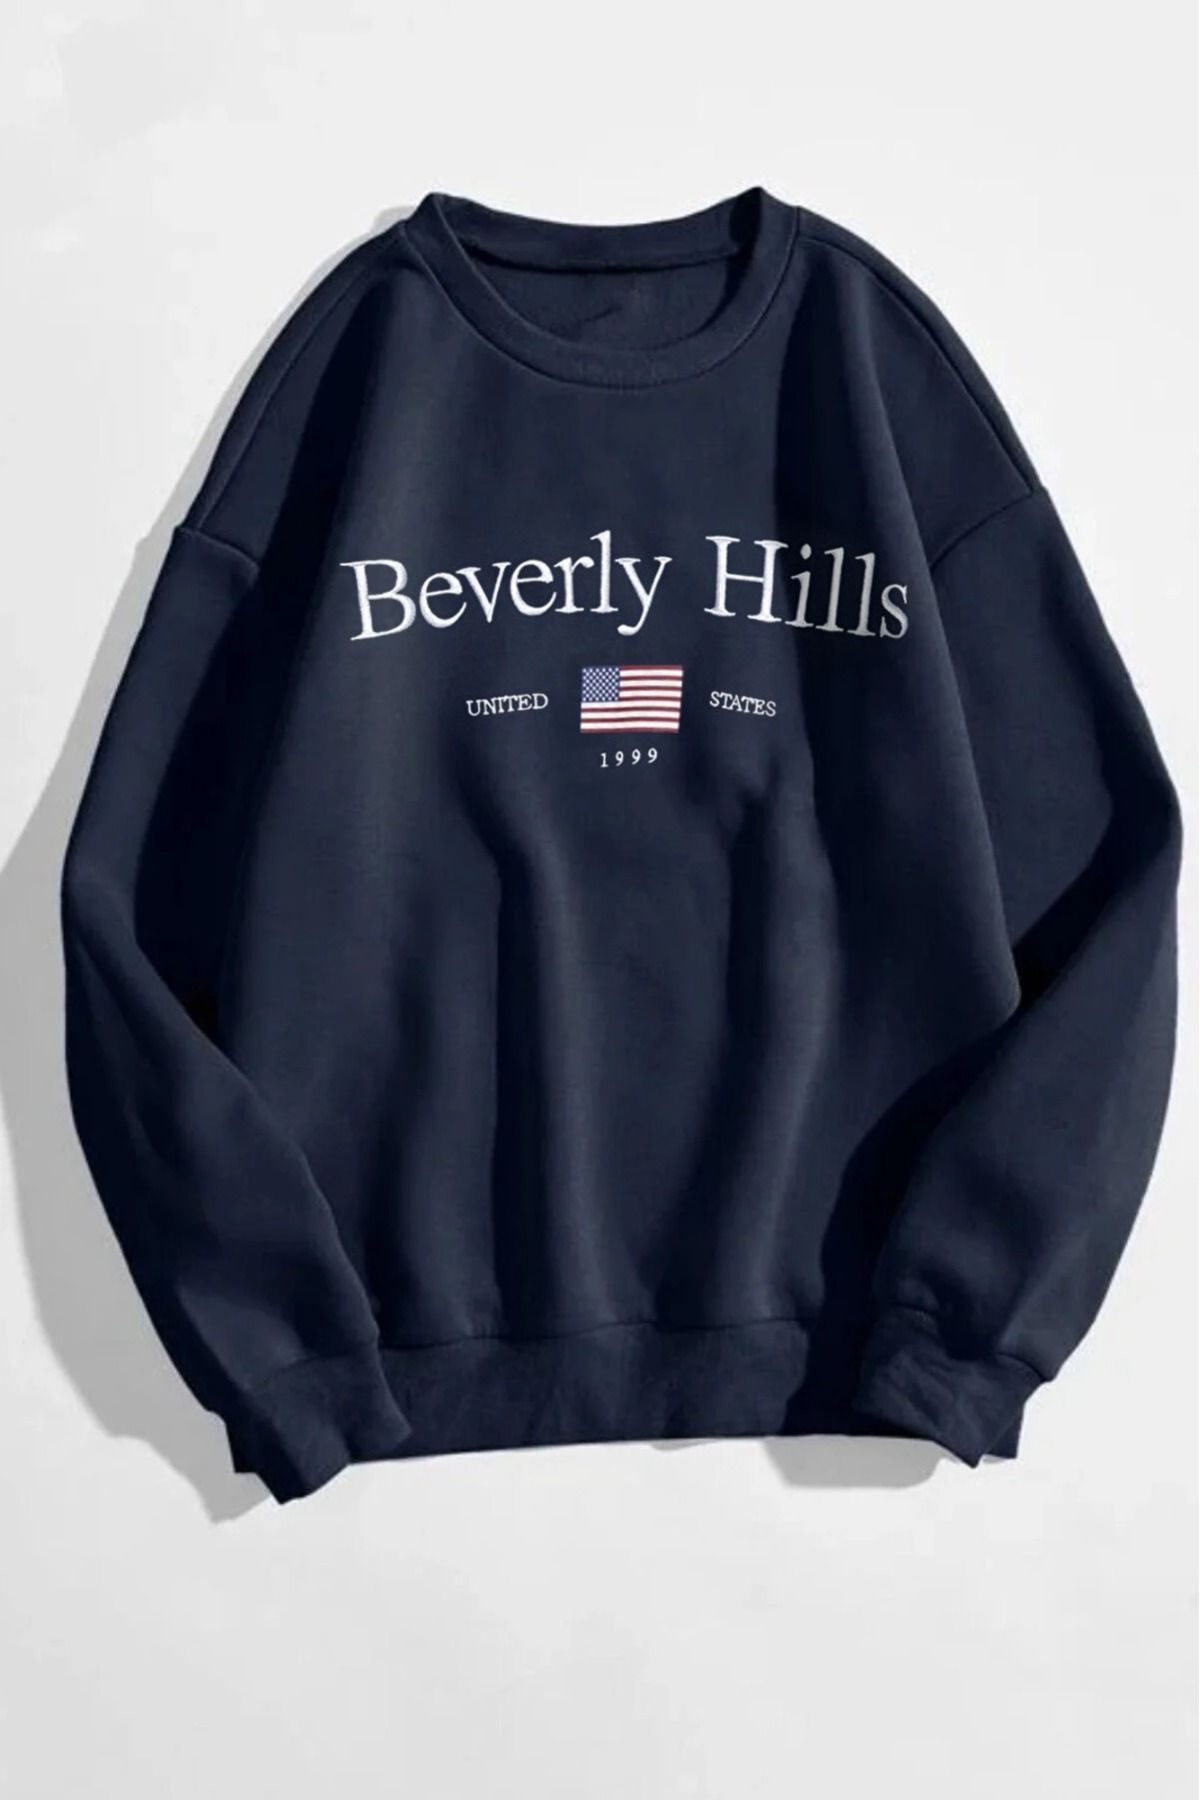 MODAGEN Beverly Hills Unisex Bisiklet Yaka Lacivert Oversize Sweatshirt